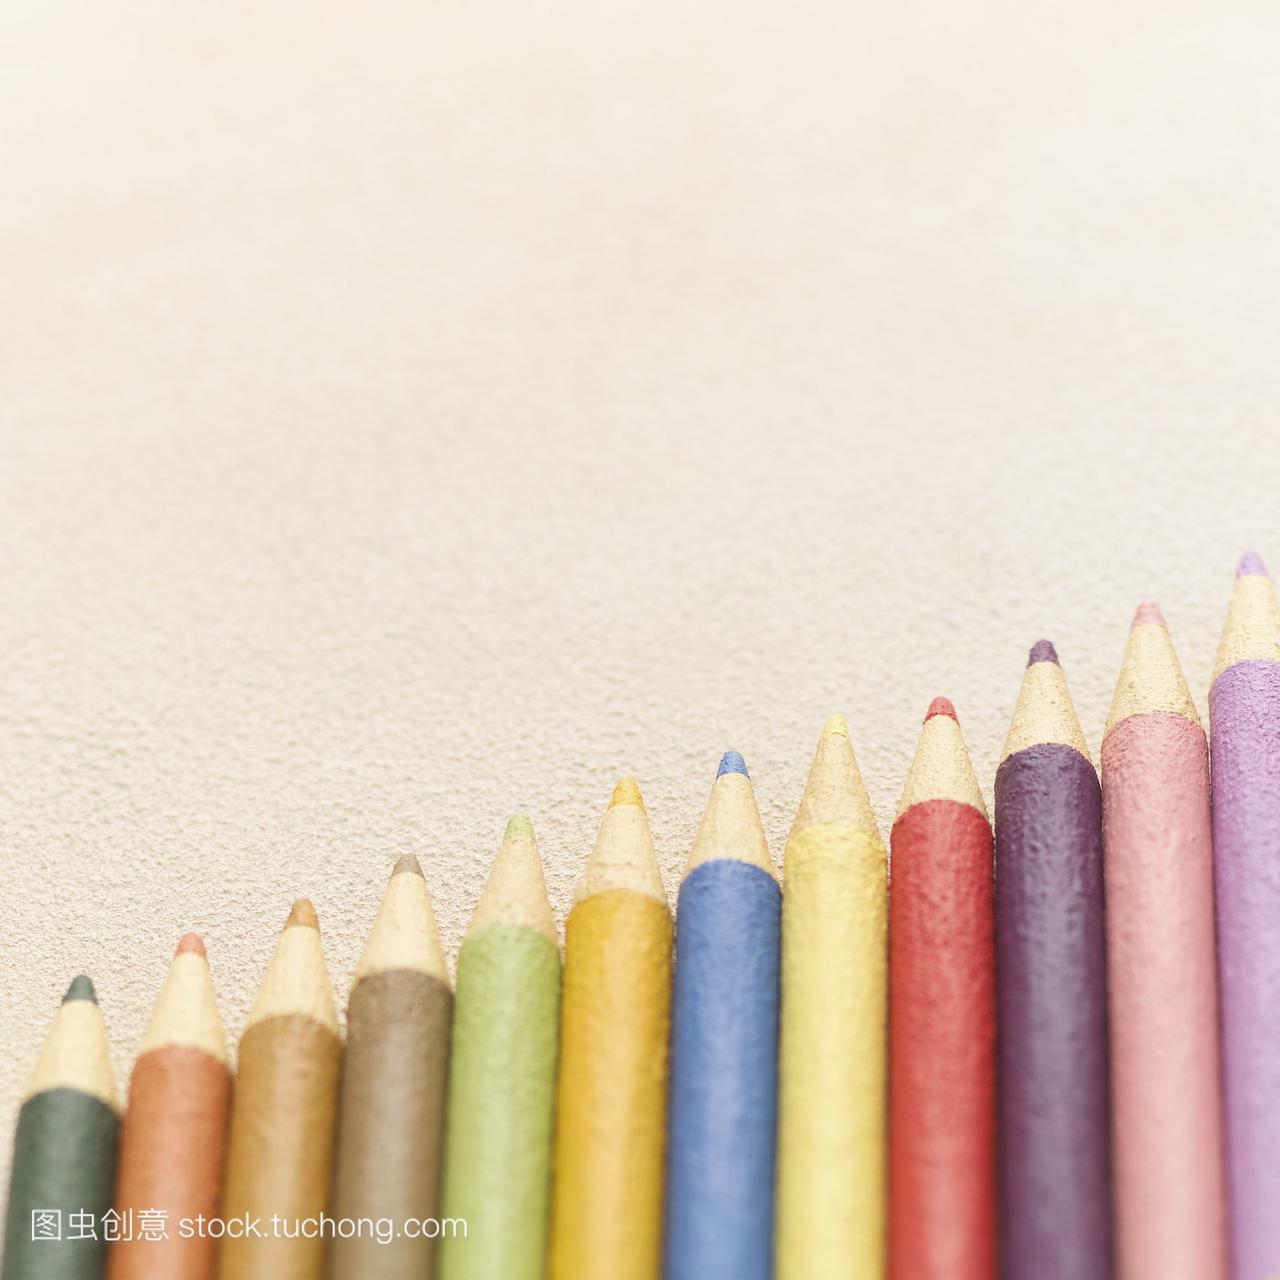 d,line up,asia,miniature,amana,colored pencil,p